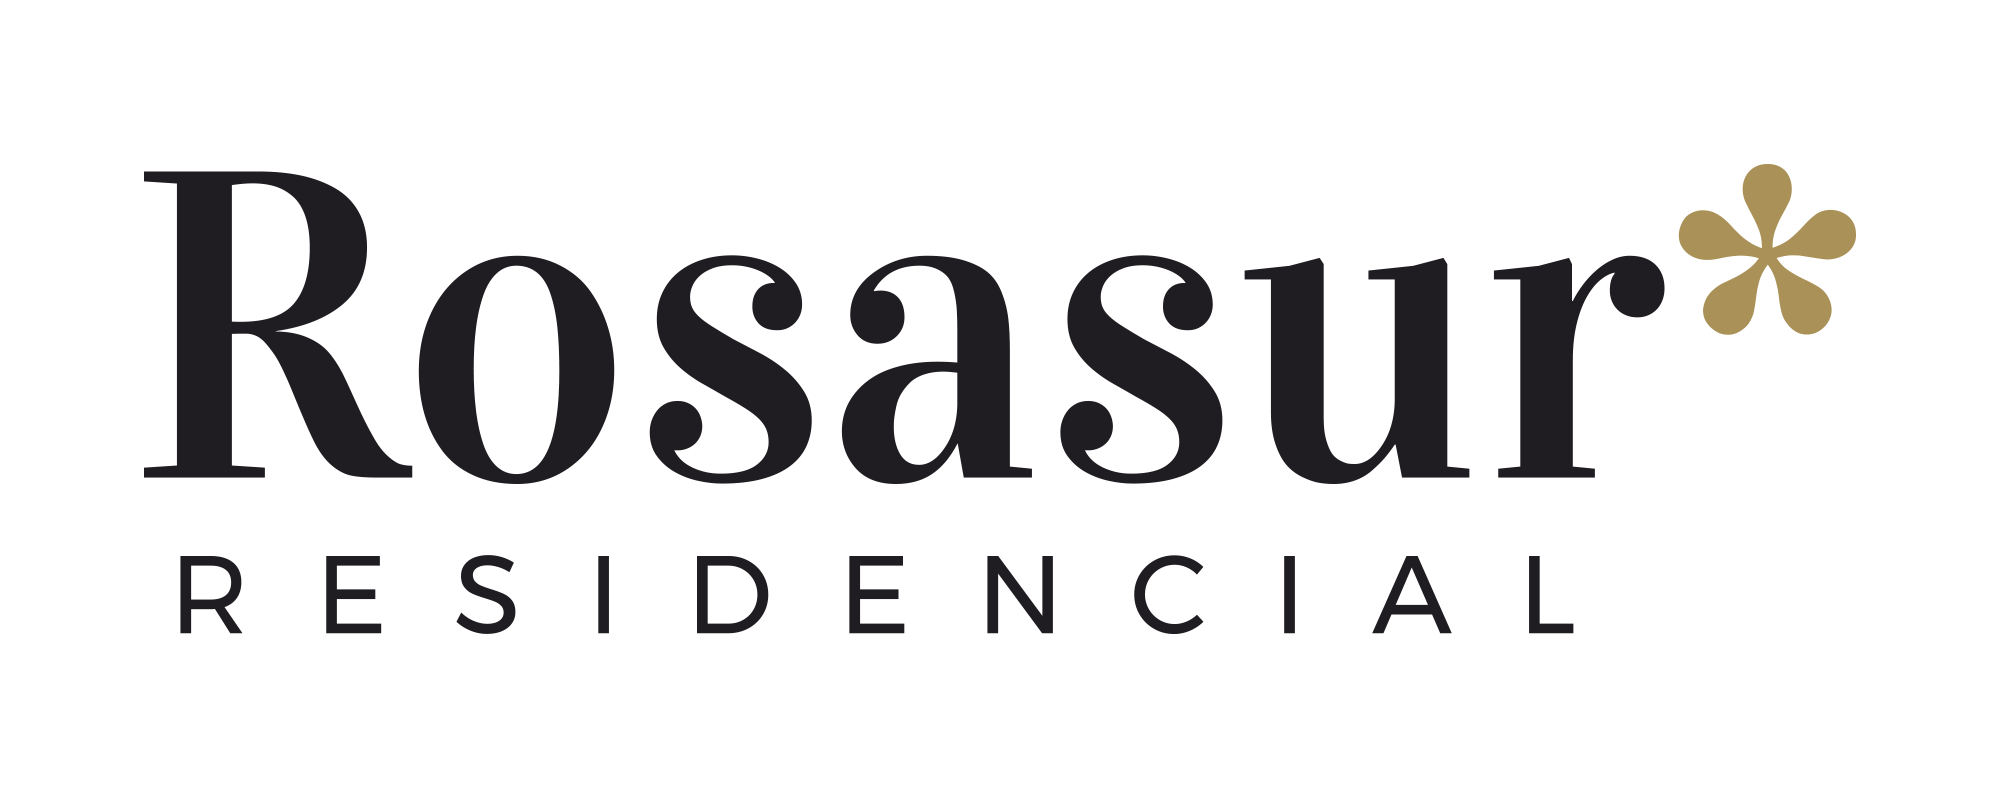 Logotipo-Rosasur-fondo-transparente